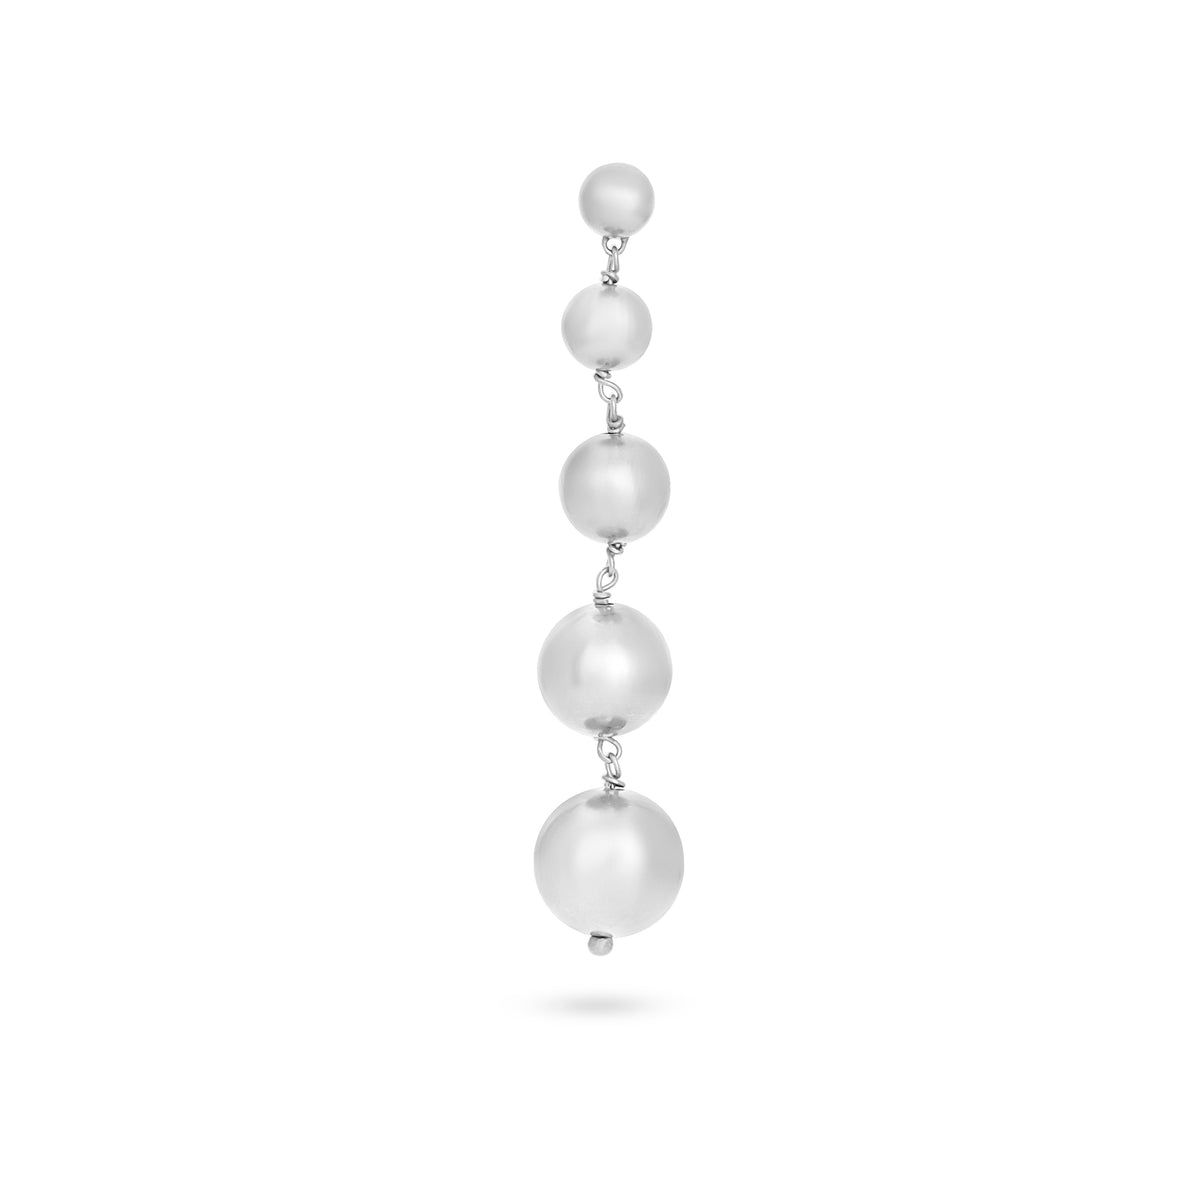 VIKA jewels jewelry jewellery matt ball earring fantasia collection recycled sterling silver handmade Bali statement piece